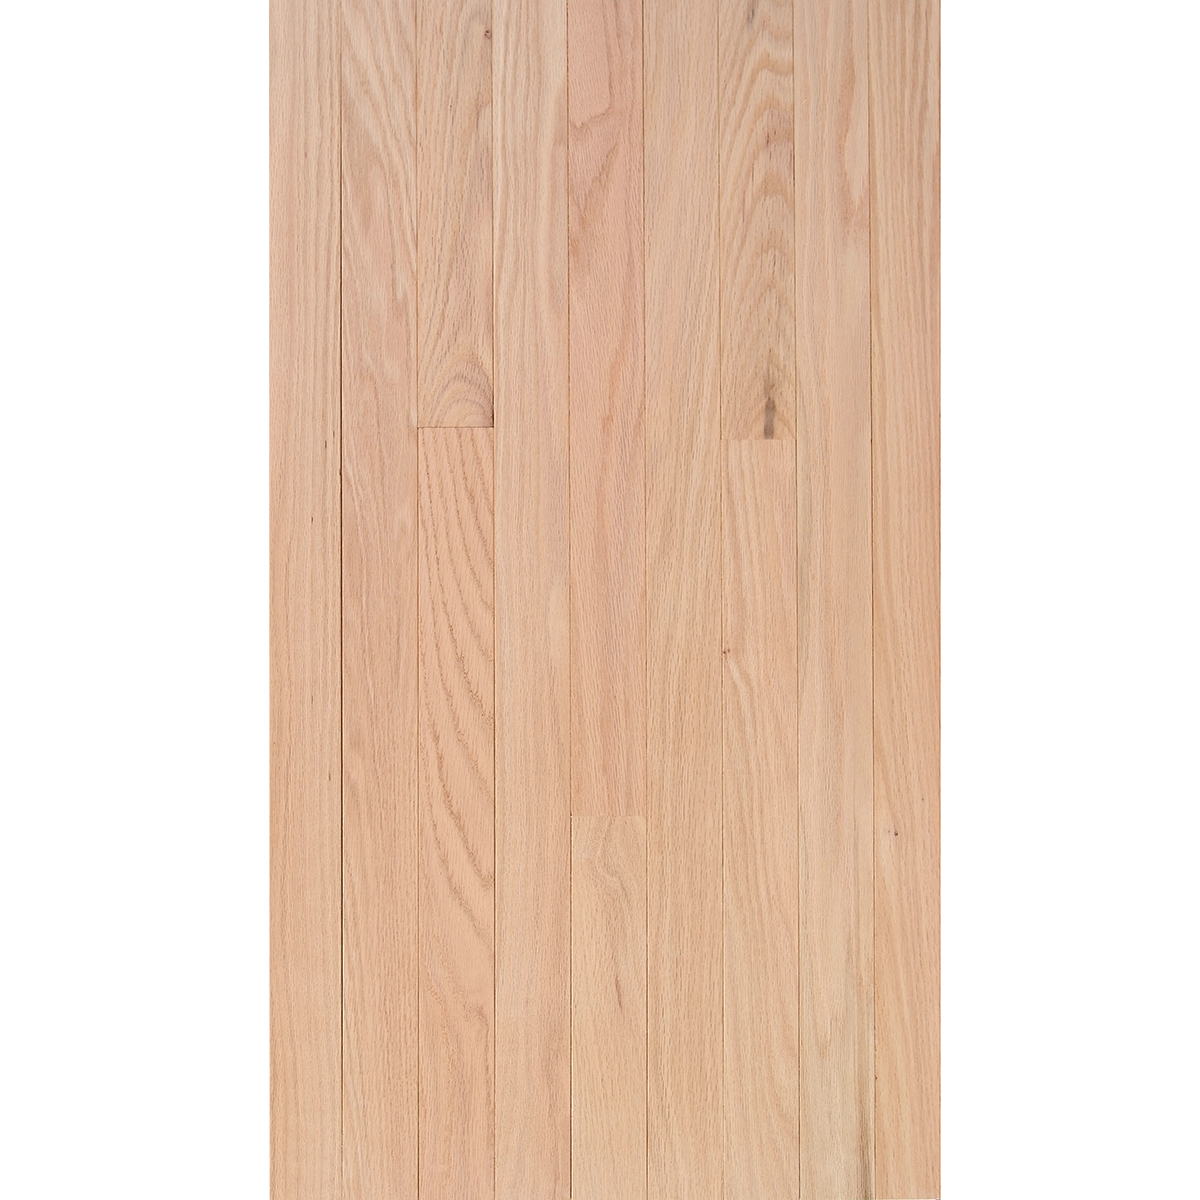 Red Oak 3 4 X 2 1 Select Grade Flooring, 2 1 4 Red Oak Hardwood Flooring